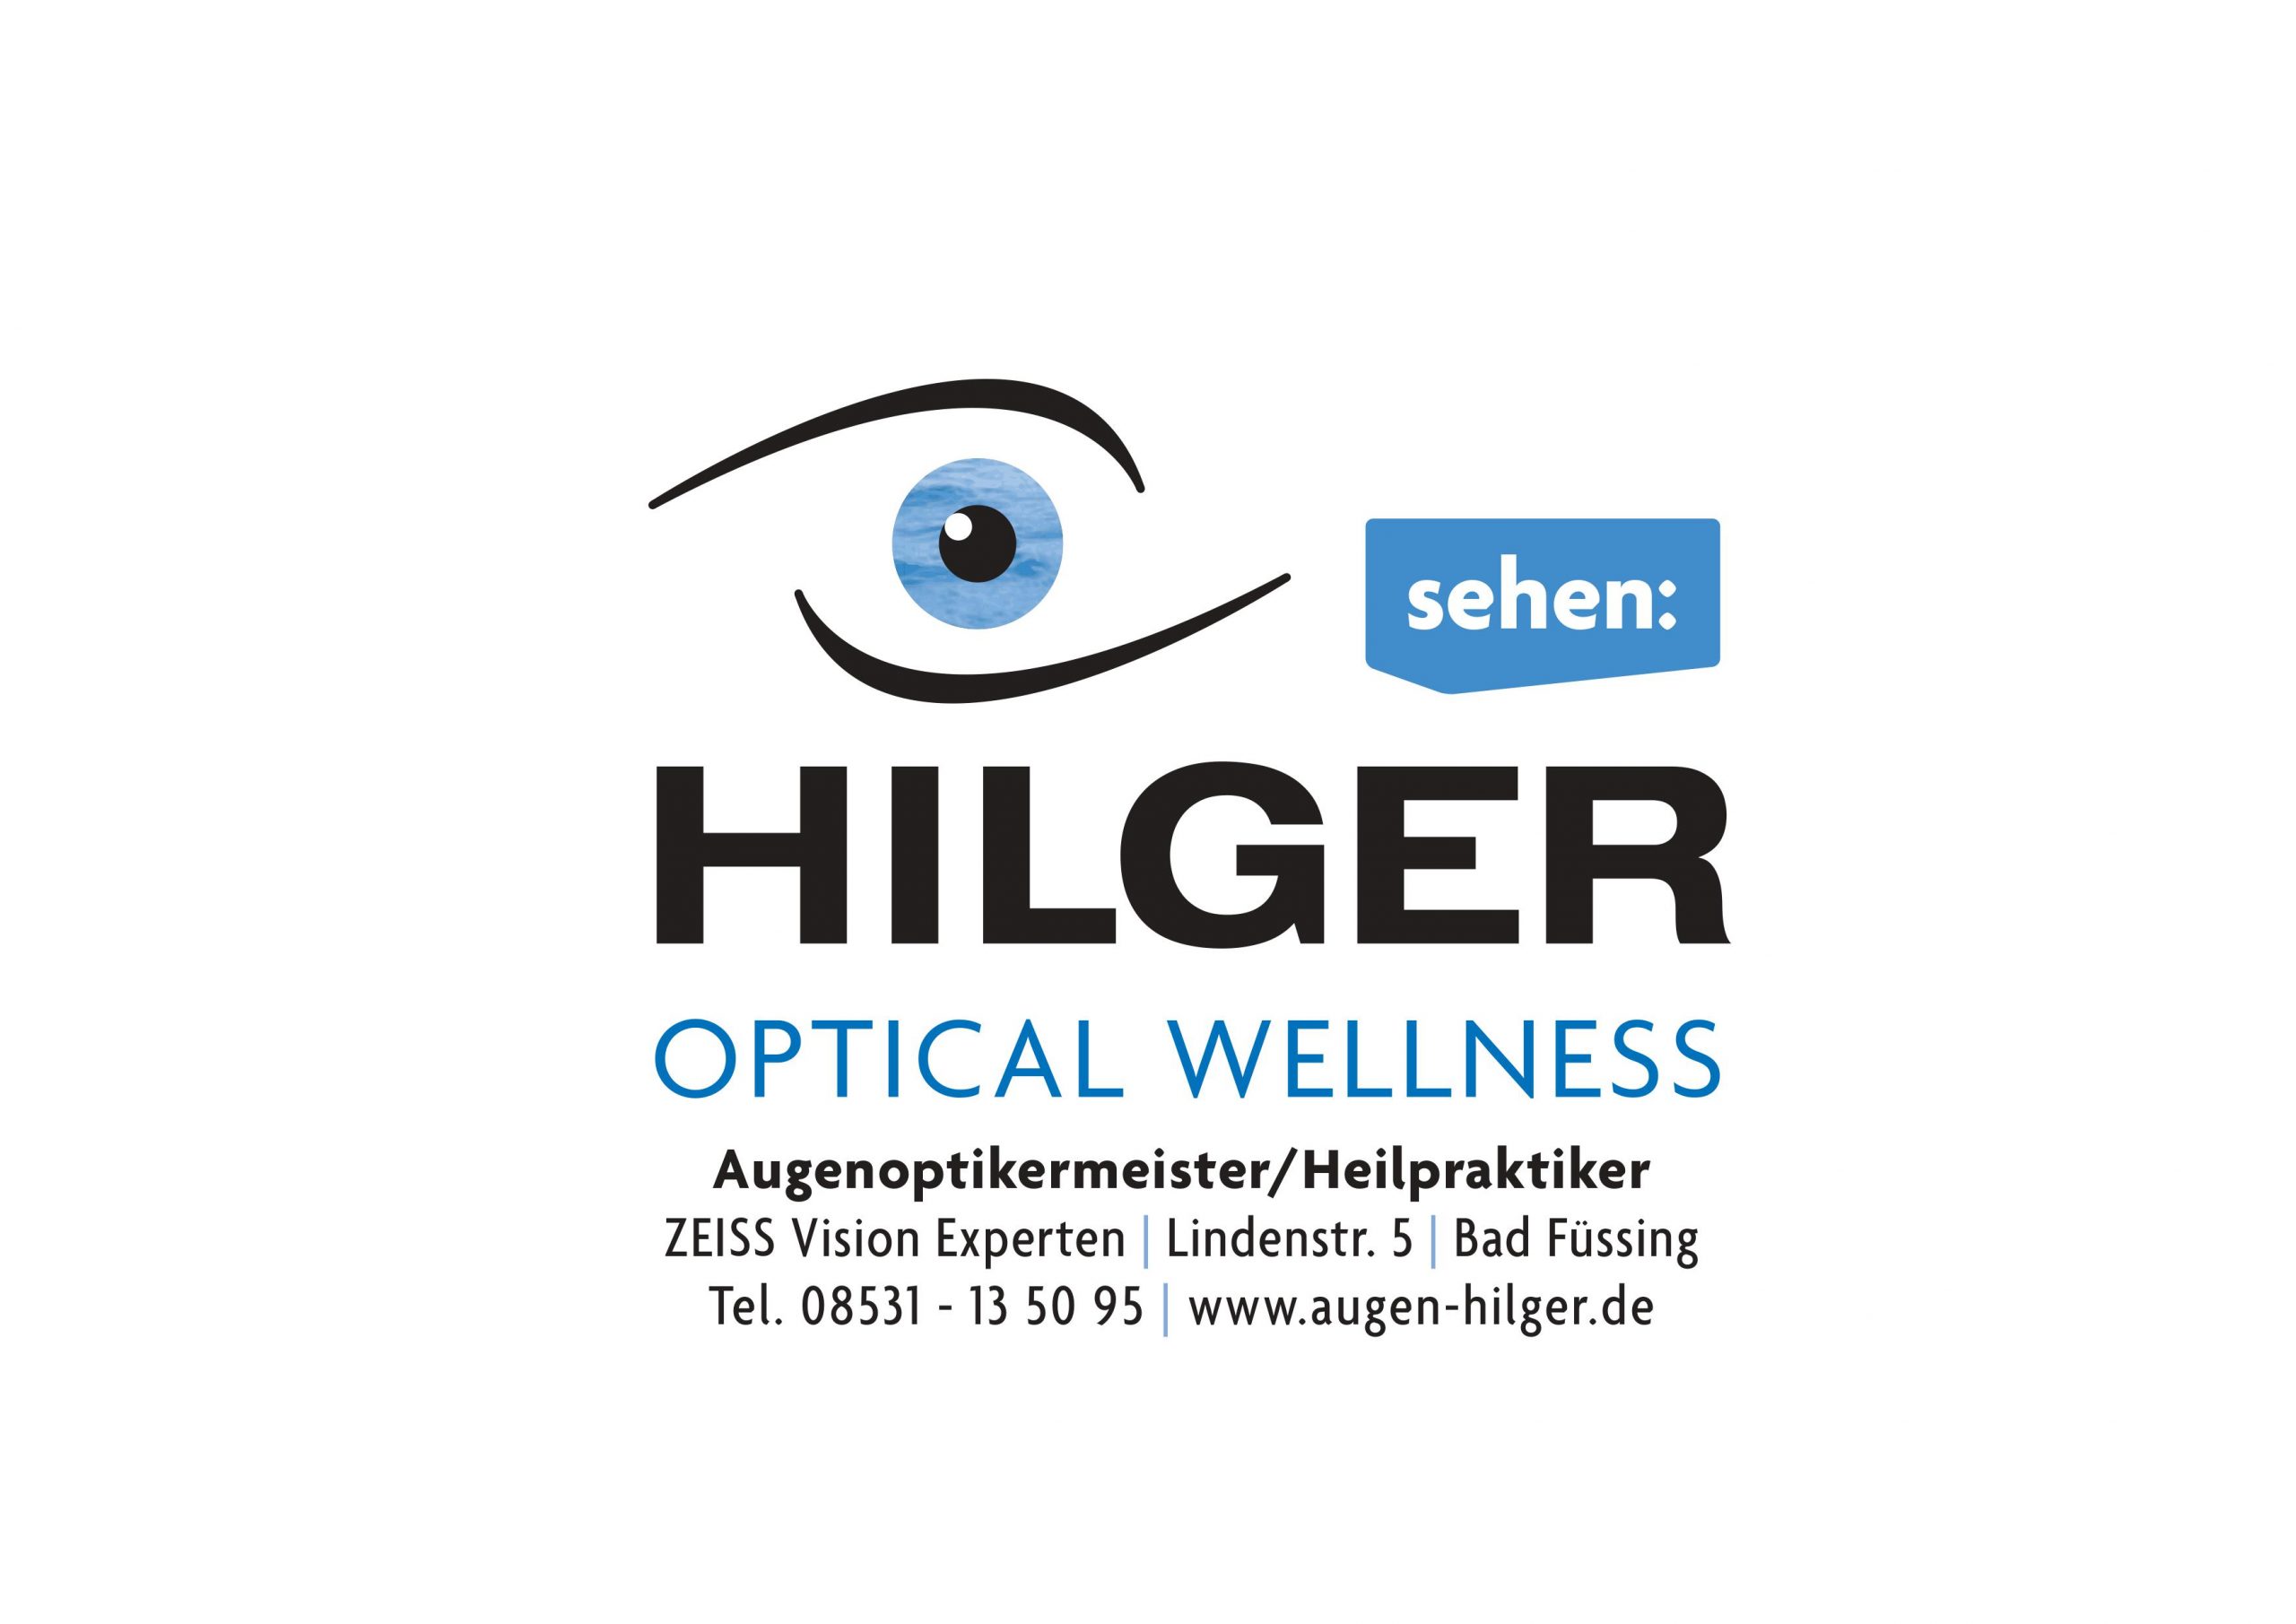 Gerd Hilger von Optical Wellness